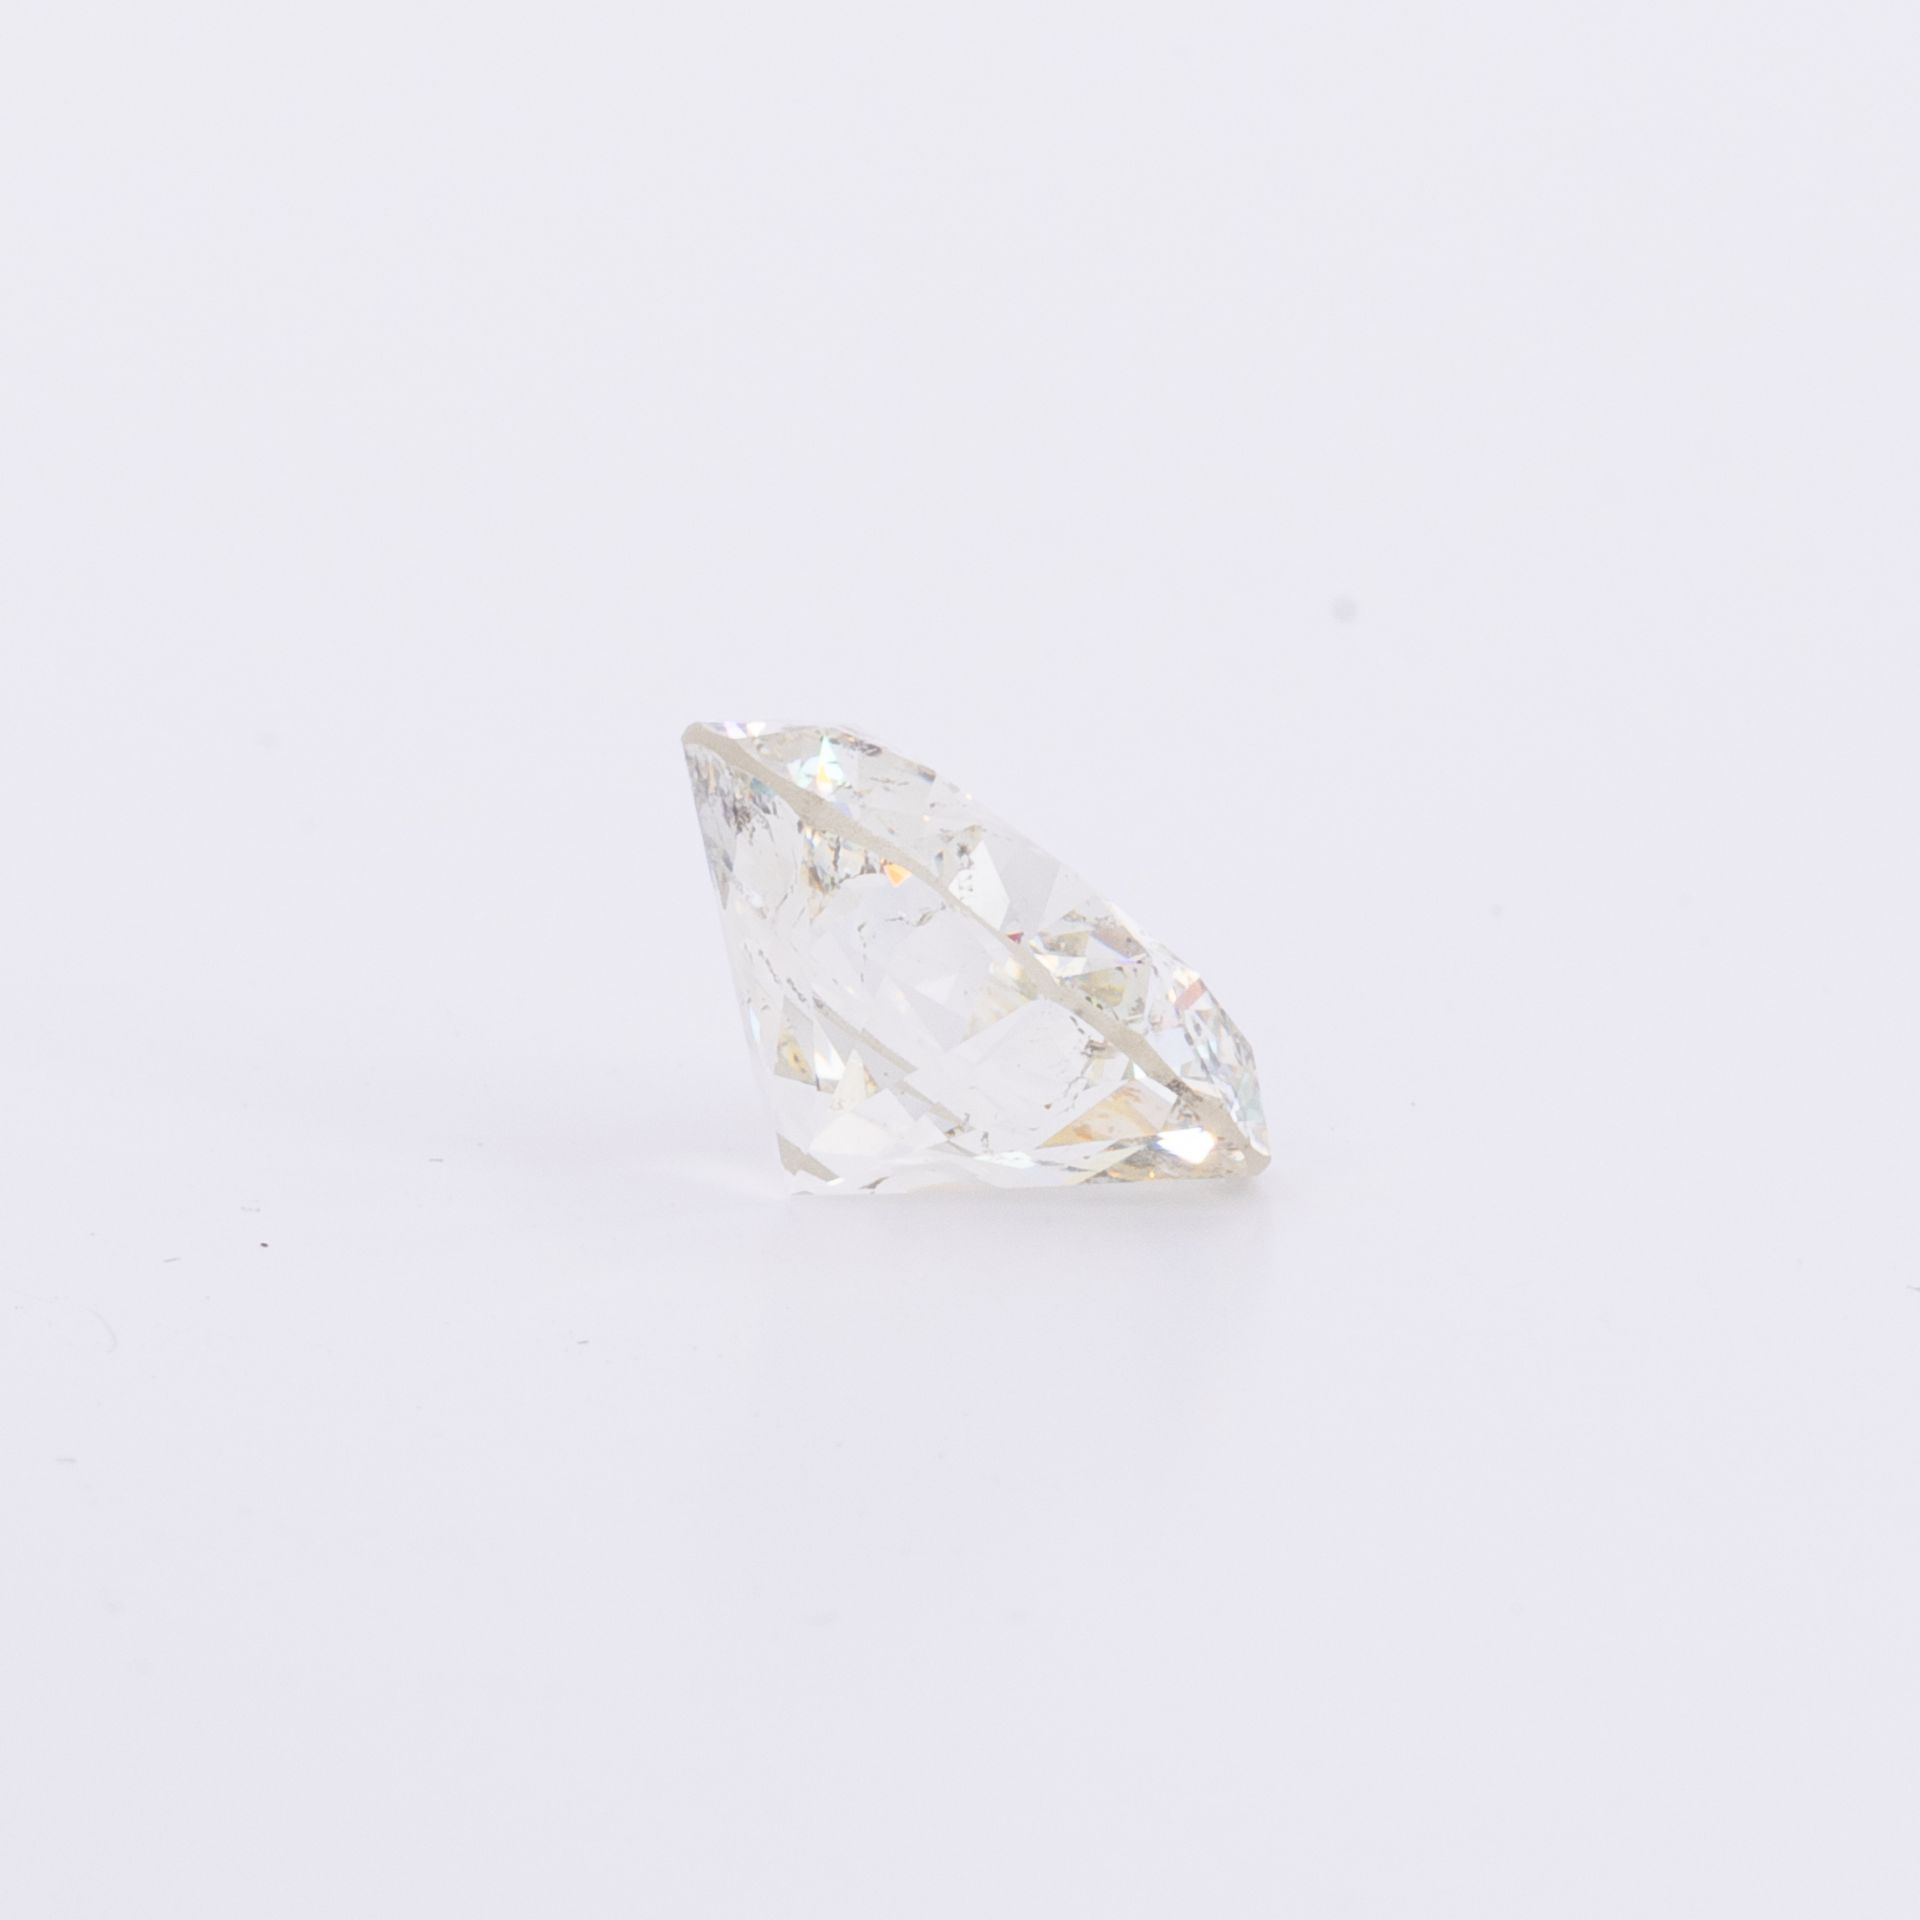 Loose-Brilliant-Cut-Diamond - Image 3 of 4